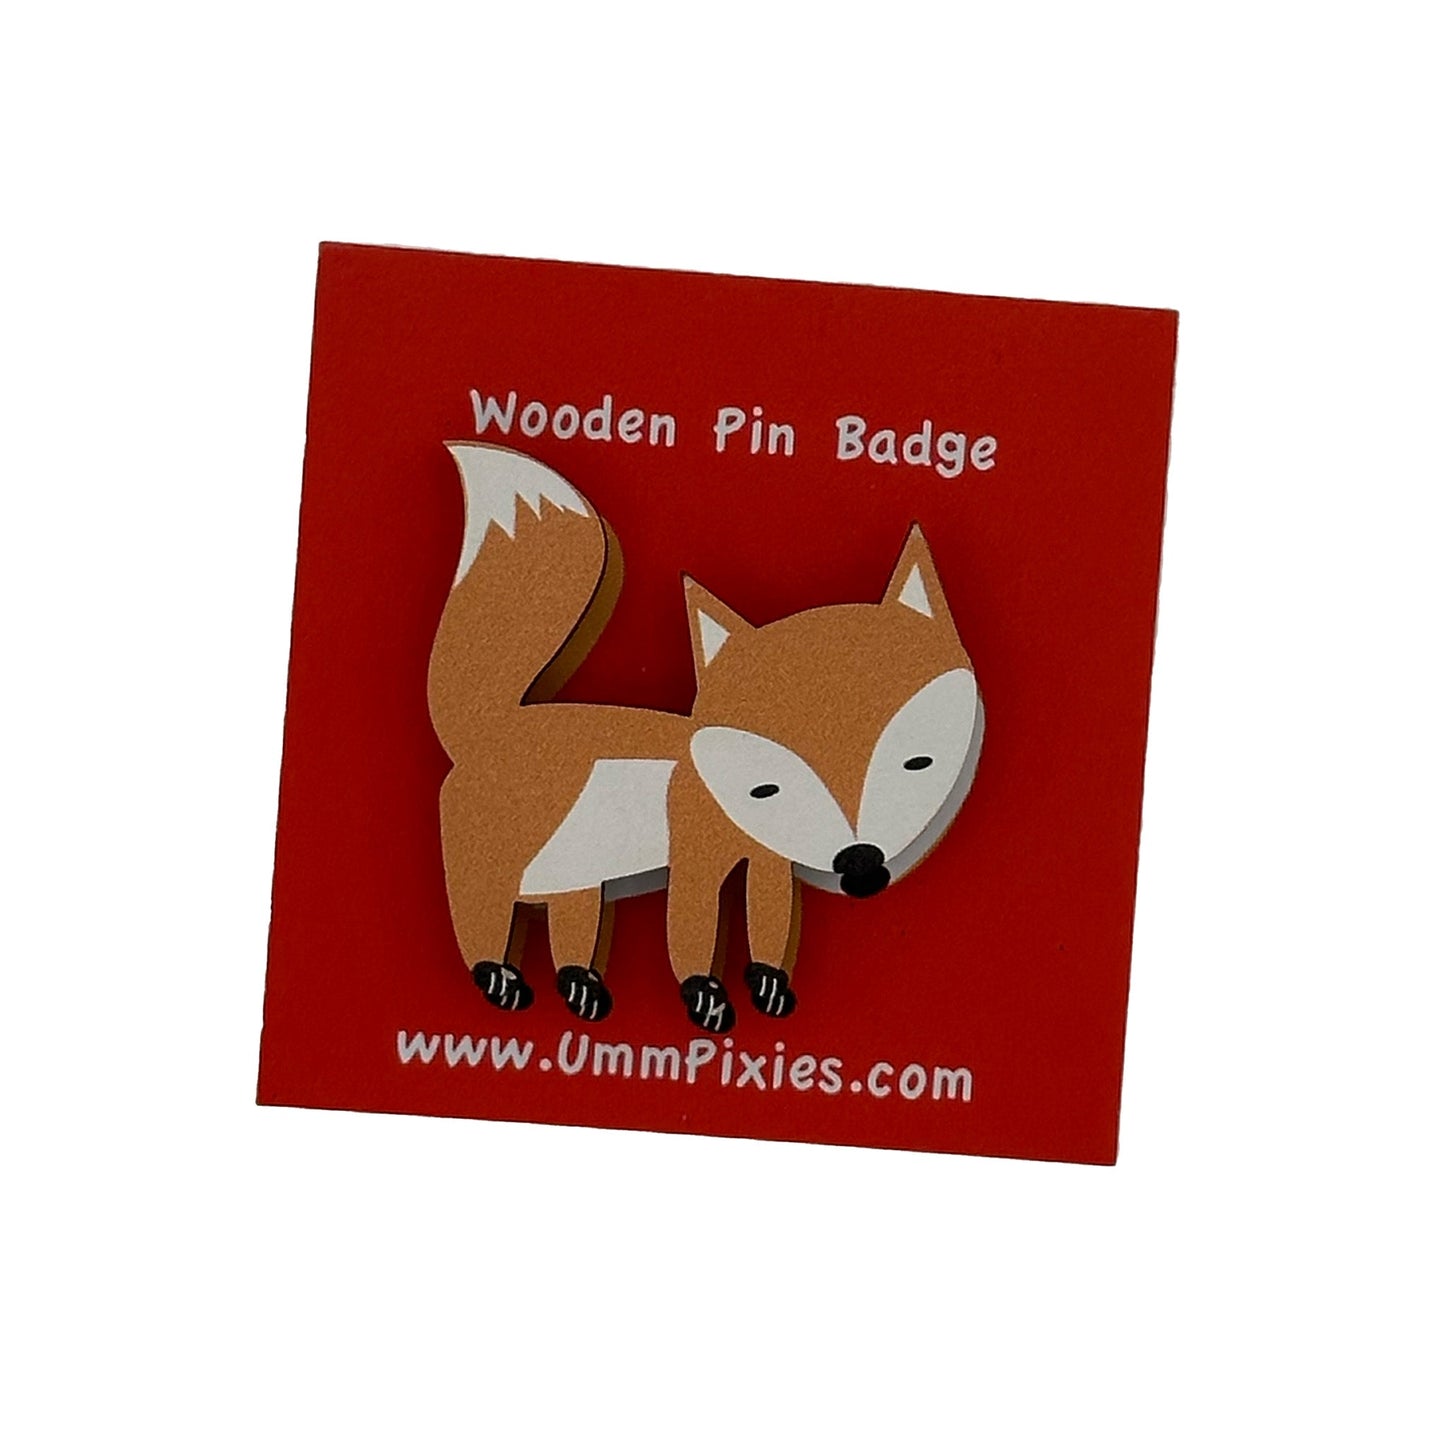 Walking Fox Wooden pin badge shown on display card